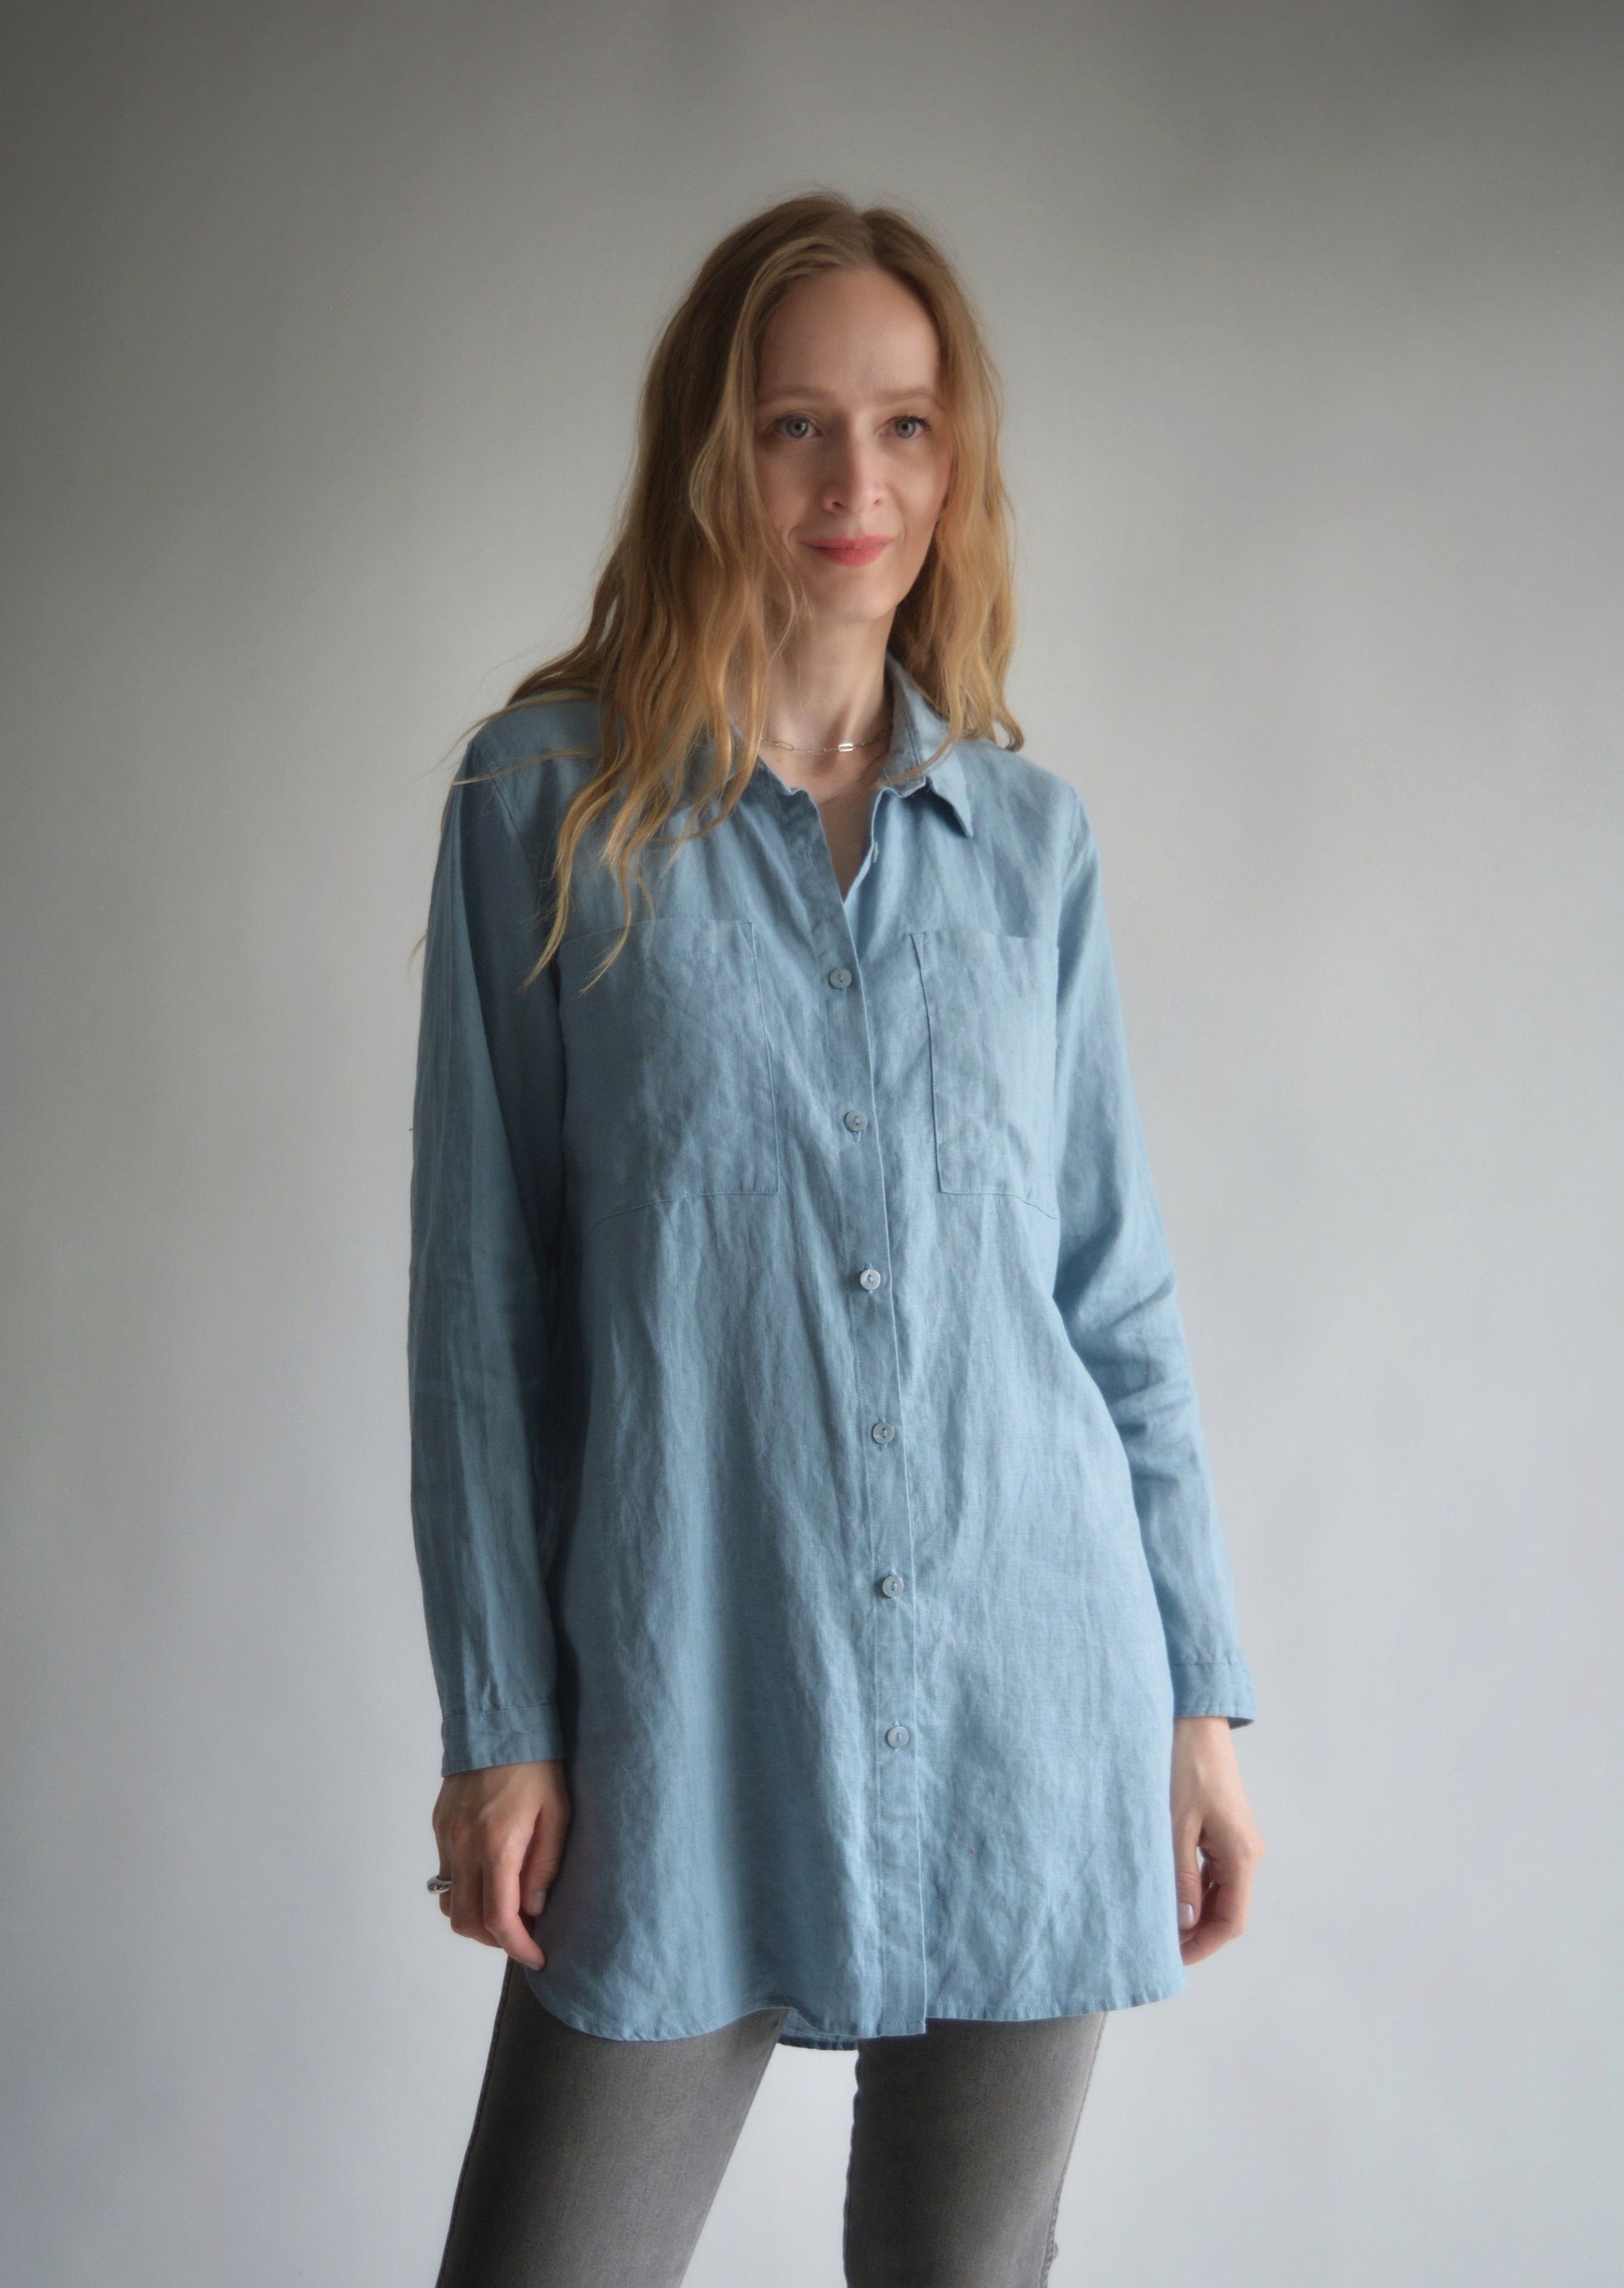 European Linen Long Sleeve Shirt in Stone Blue color – Moon Mountain